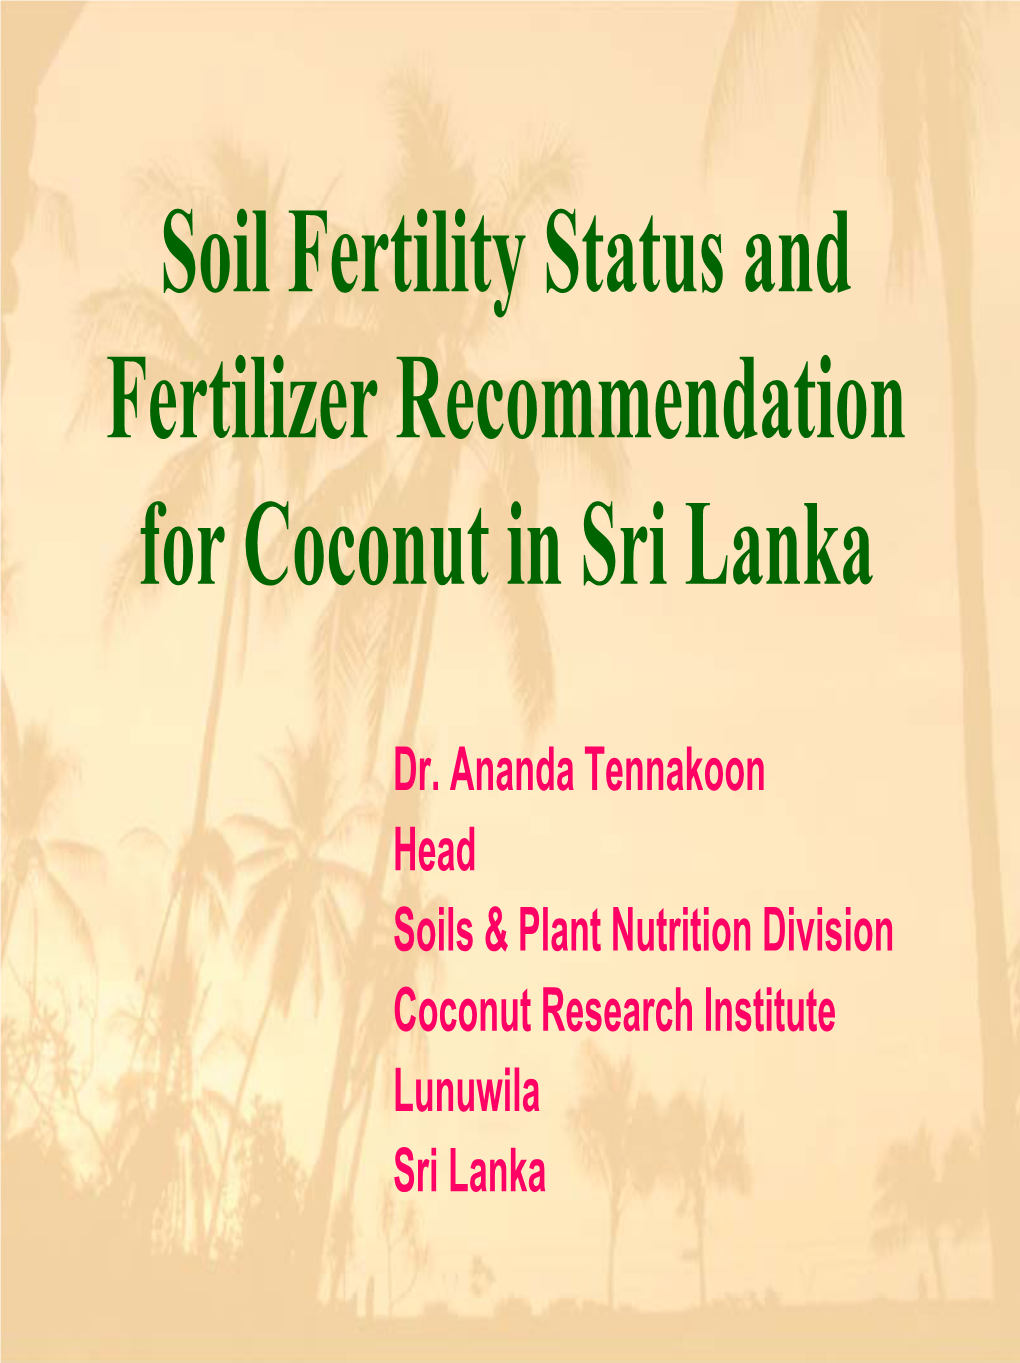 Soil Fertility Status and Fertilizer Recommendation for Coconut in Sri Lanka